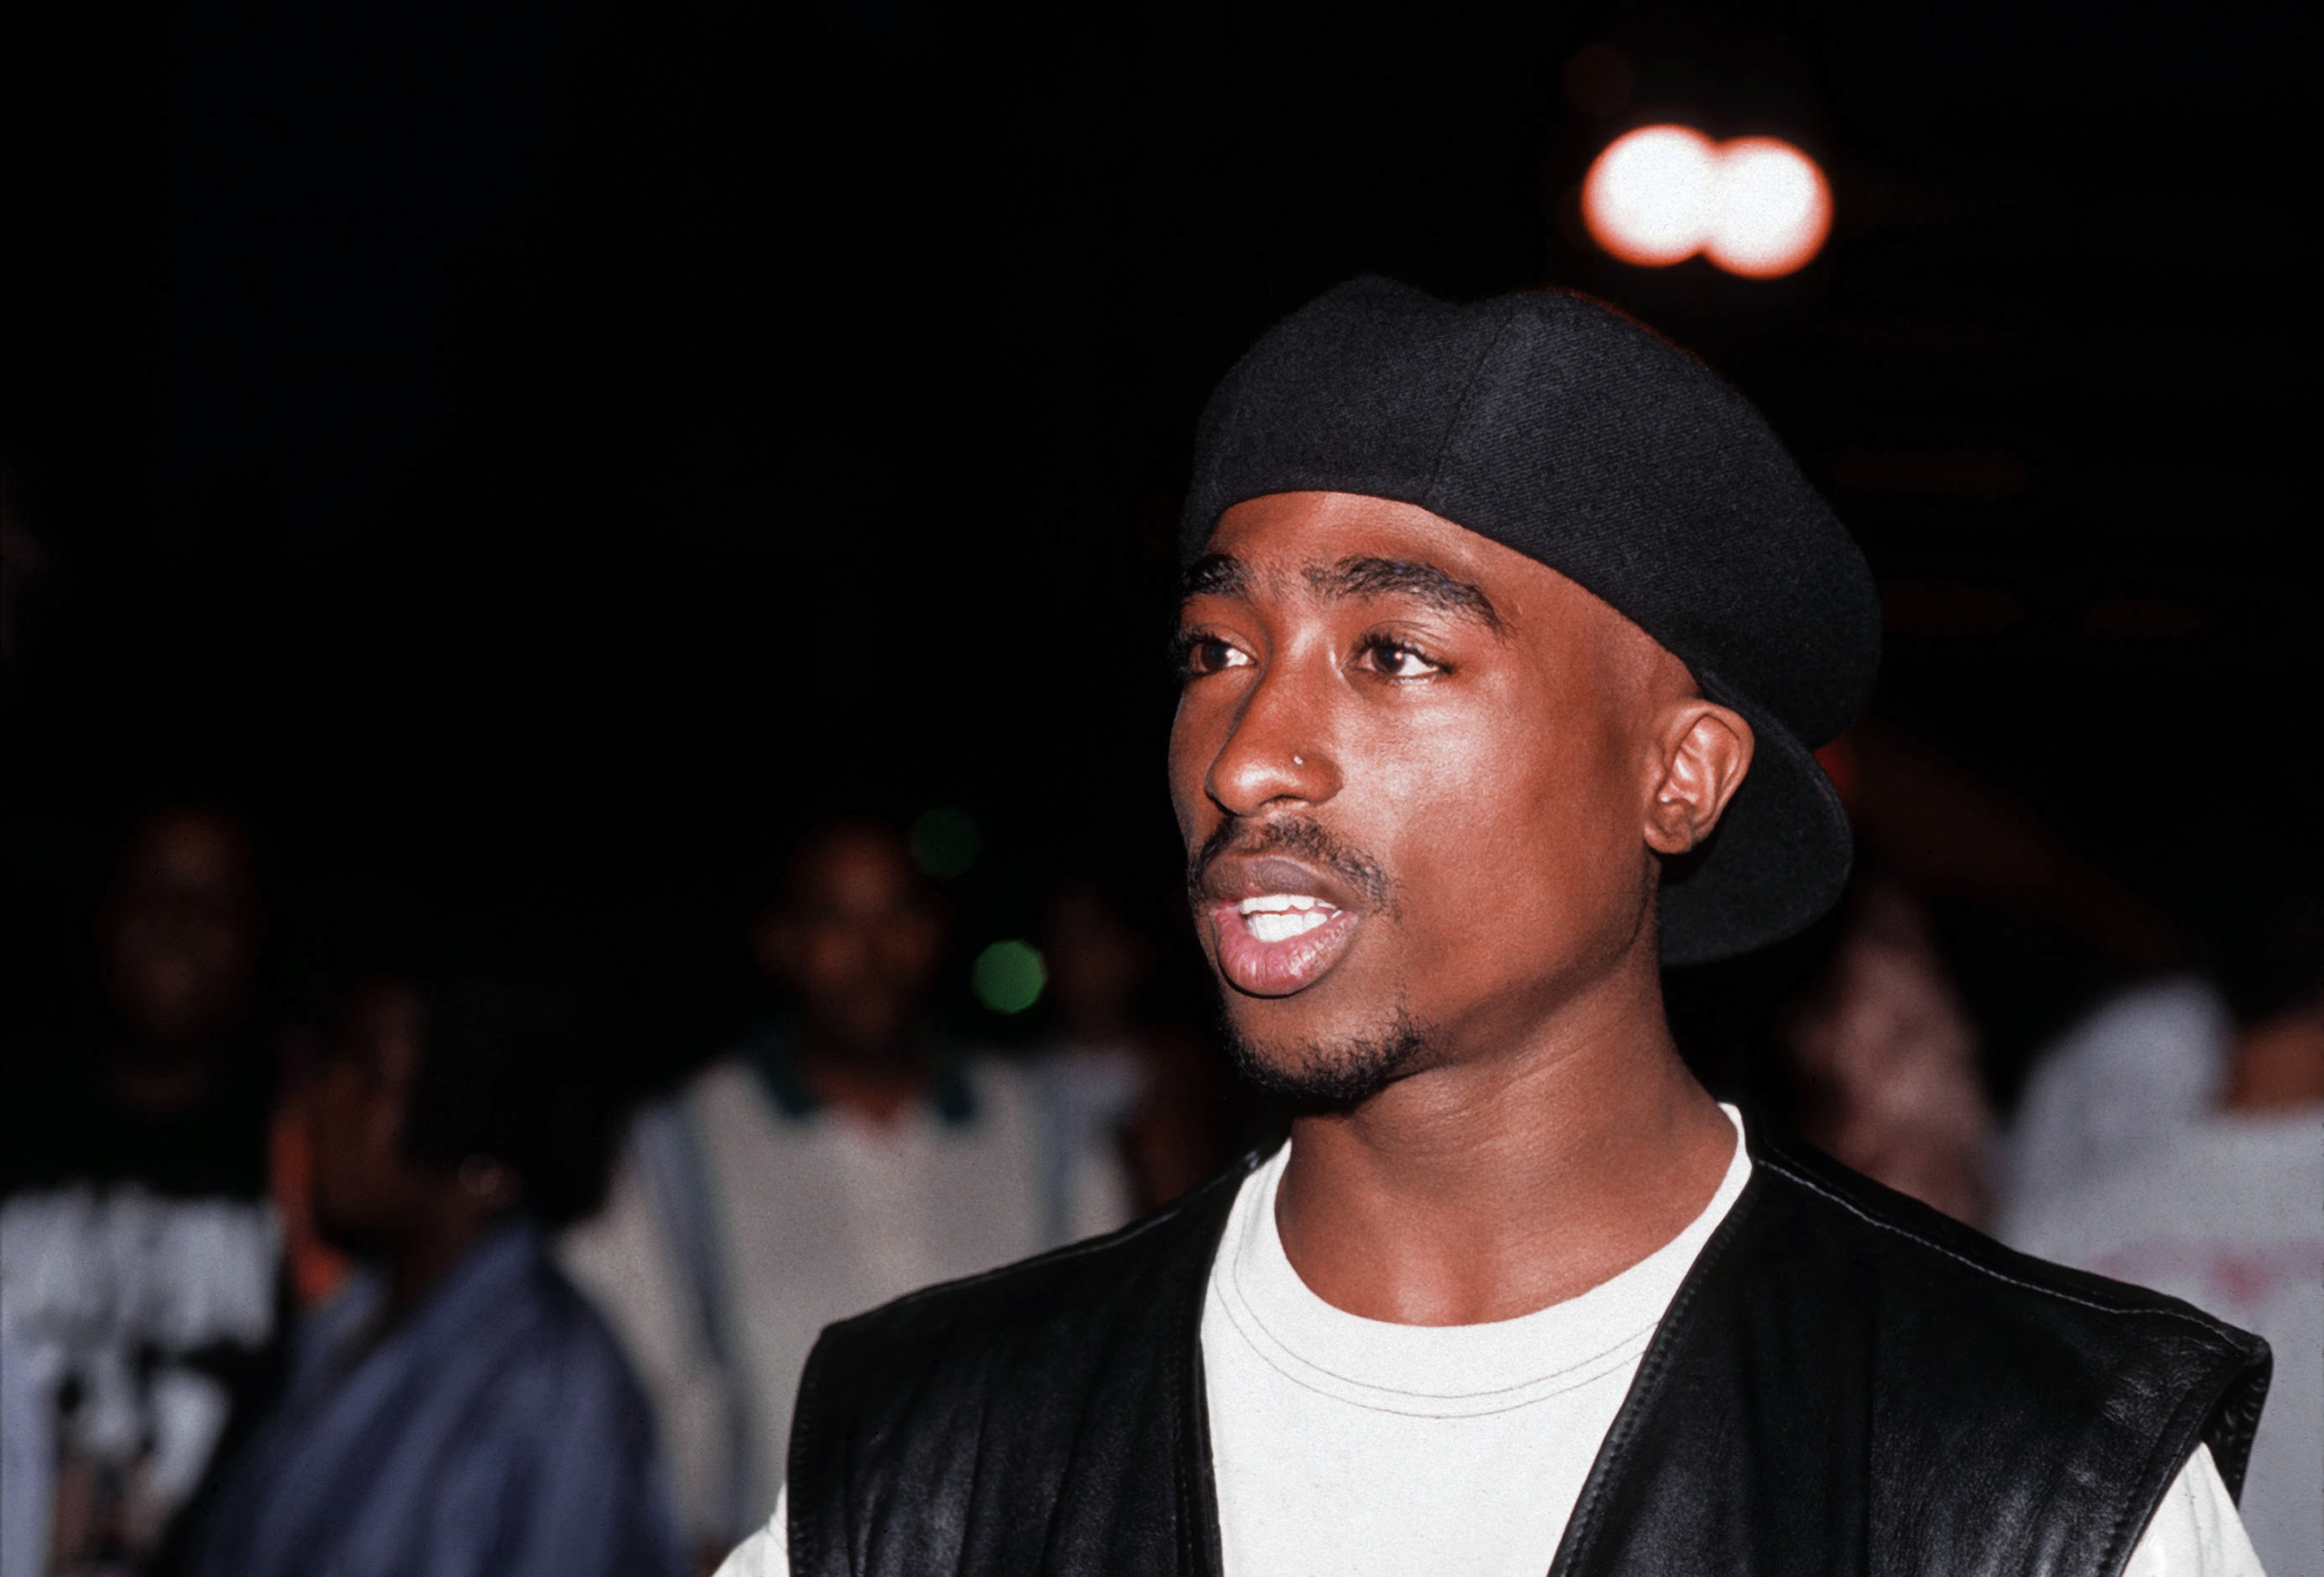 The late rapper Tupac Shakur